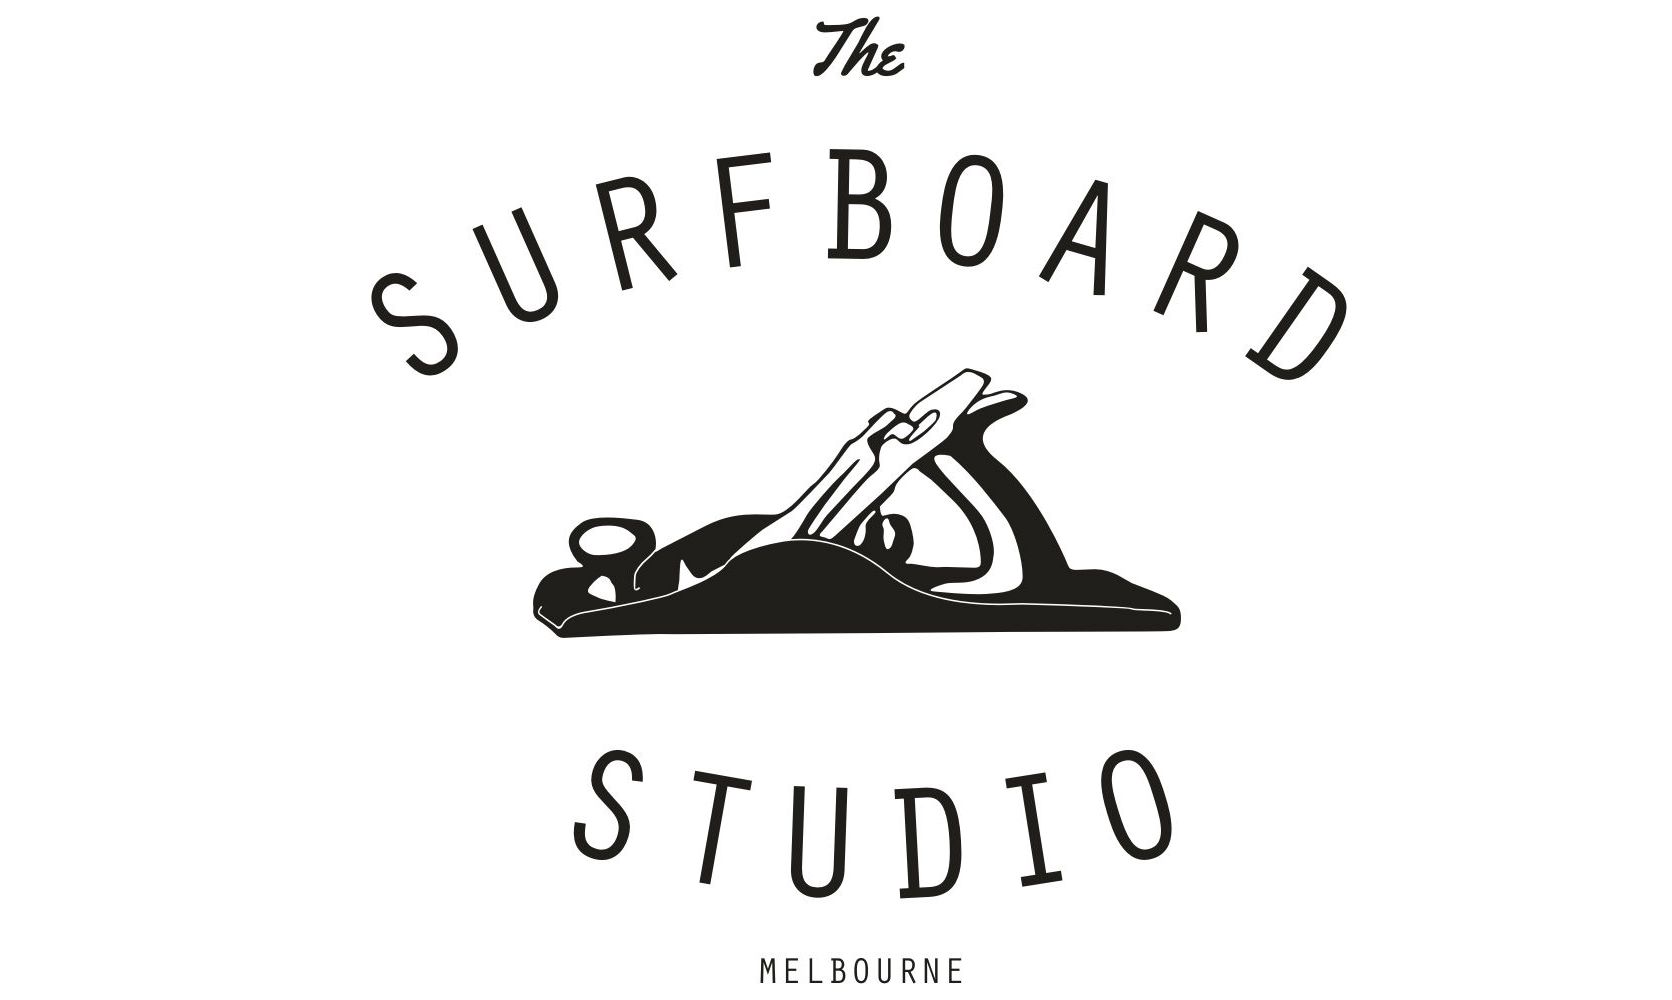 Shapers Blocks by the Surfboard Studio